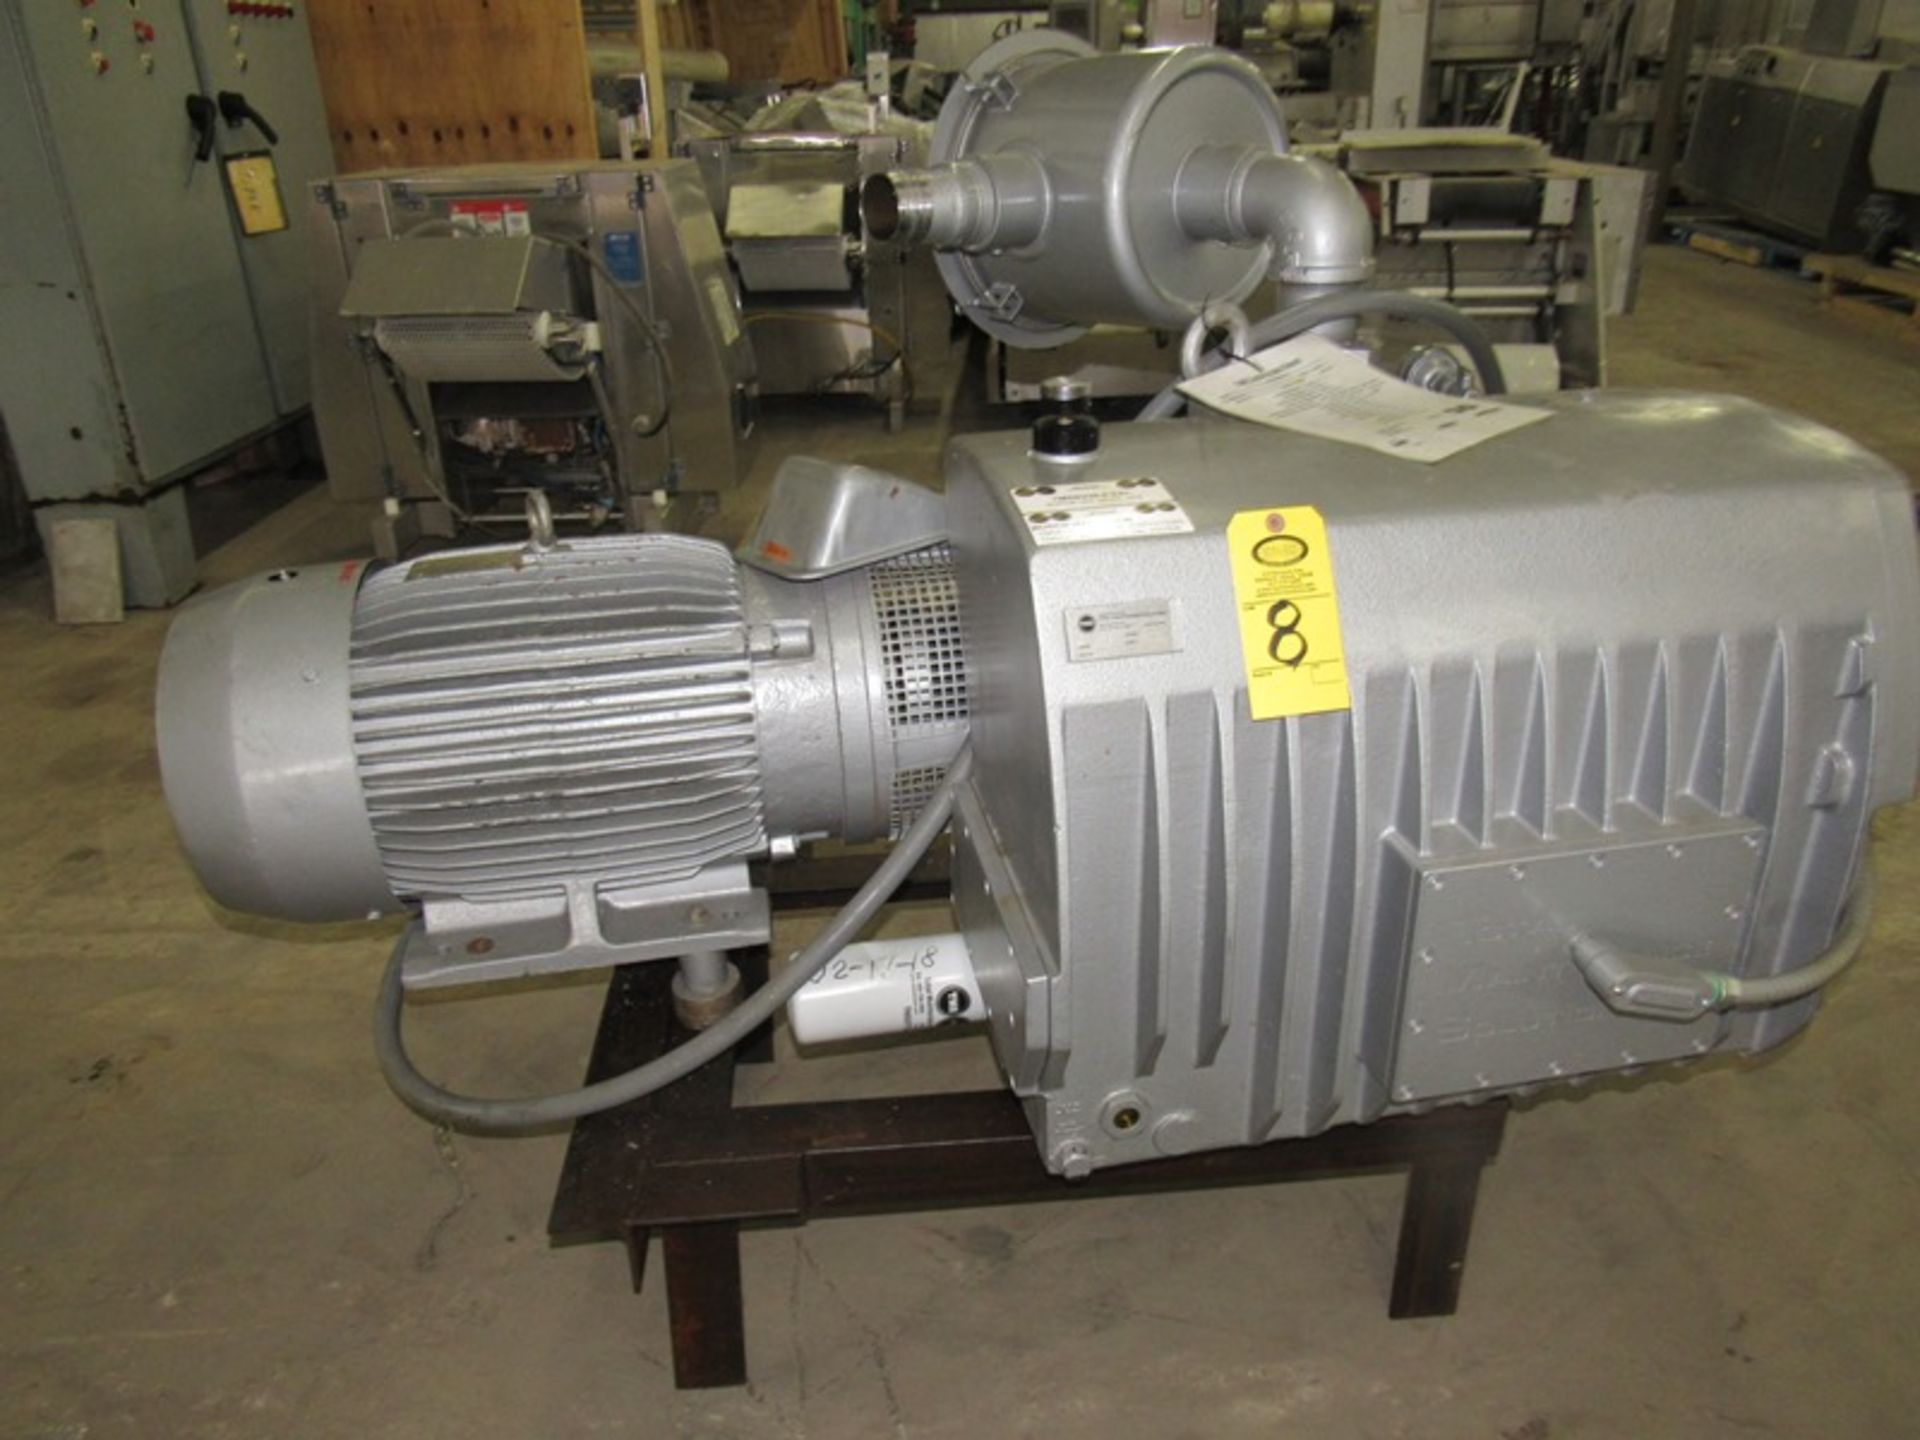 Busch Mdl. RA630 Vacuum Pump, 25 h.p., 230/460 volts, 3 phase, heat exchanger, rebuilt by TMS,